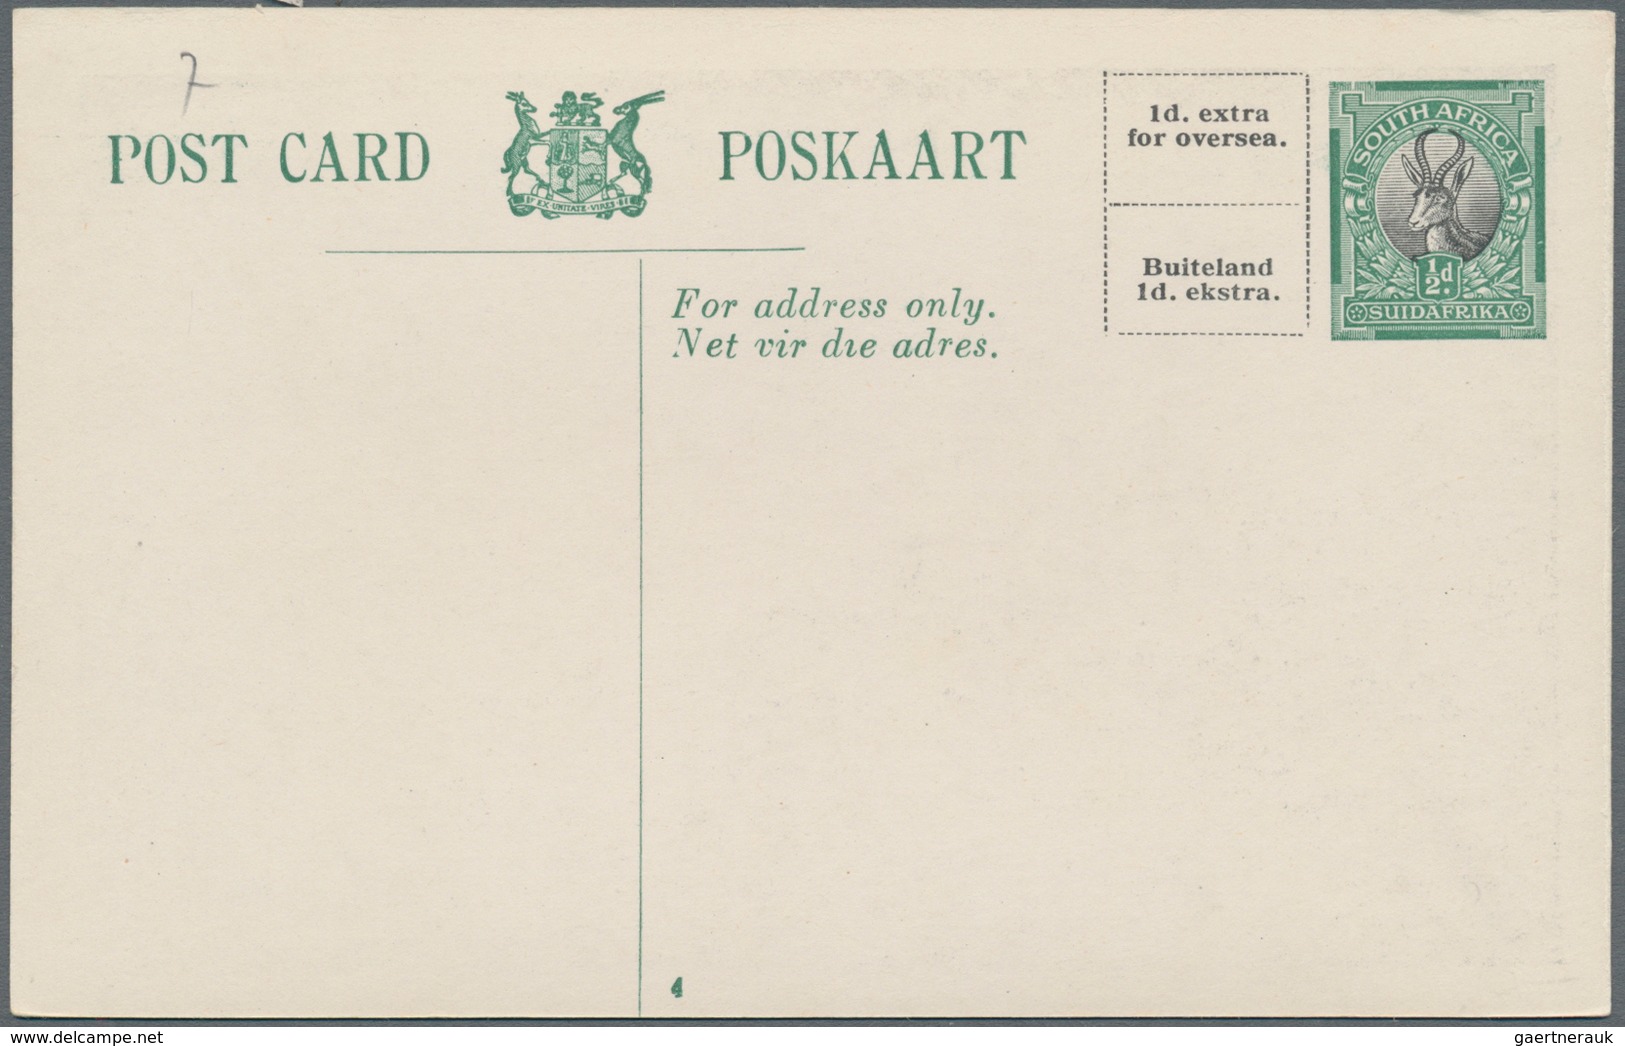 Südafrika - Ganzsachen: 1927, 22 different pictorial stat. postcards Springbok ½d. green/black with